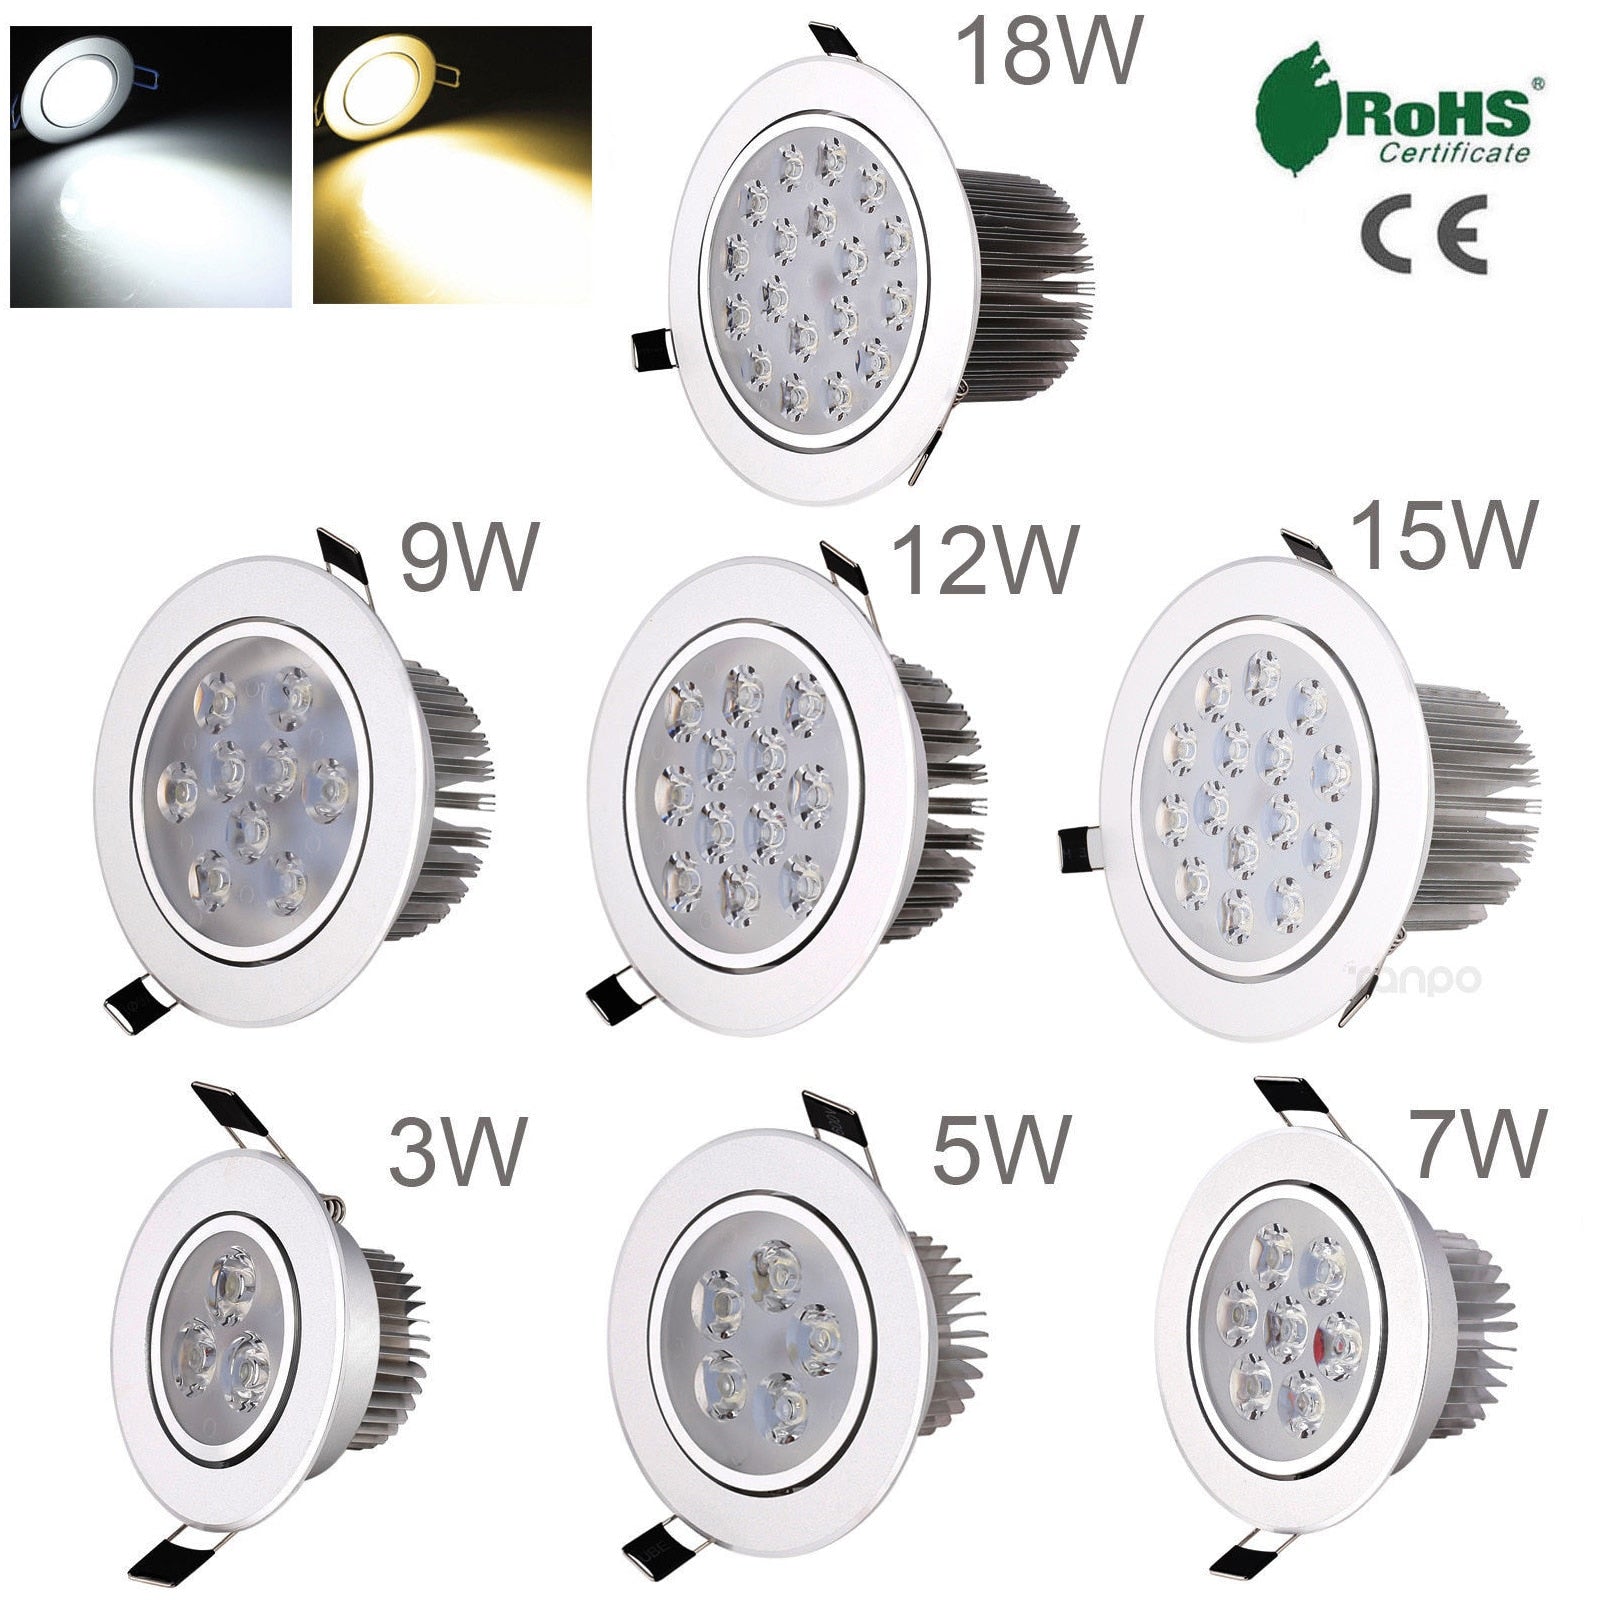 Dimmable LED 3W 5W 7W 9W 12W 15W 18W Recessed Ceiling Down Light White Lámpara 220V 110V Home Downlight Spotlight Energy Saving